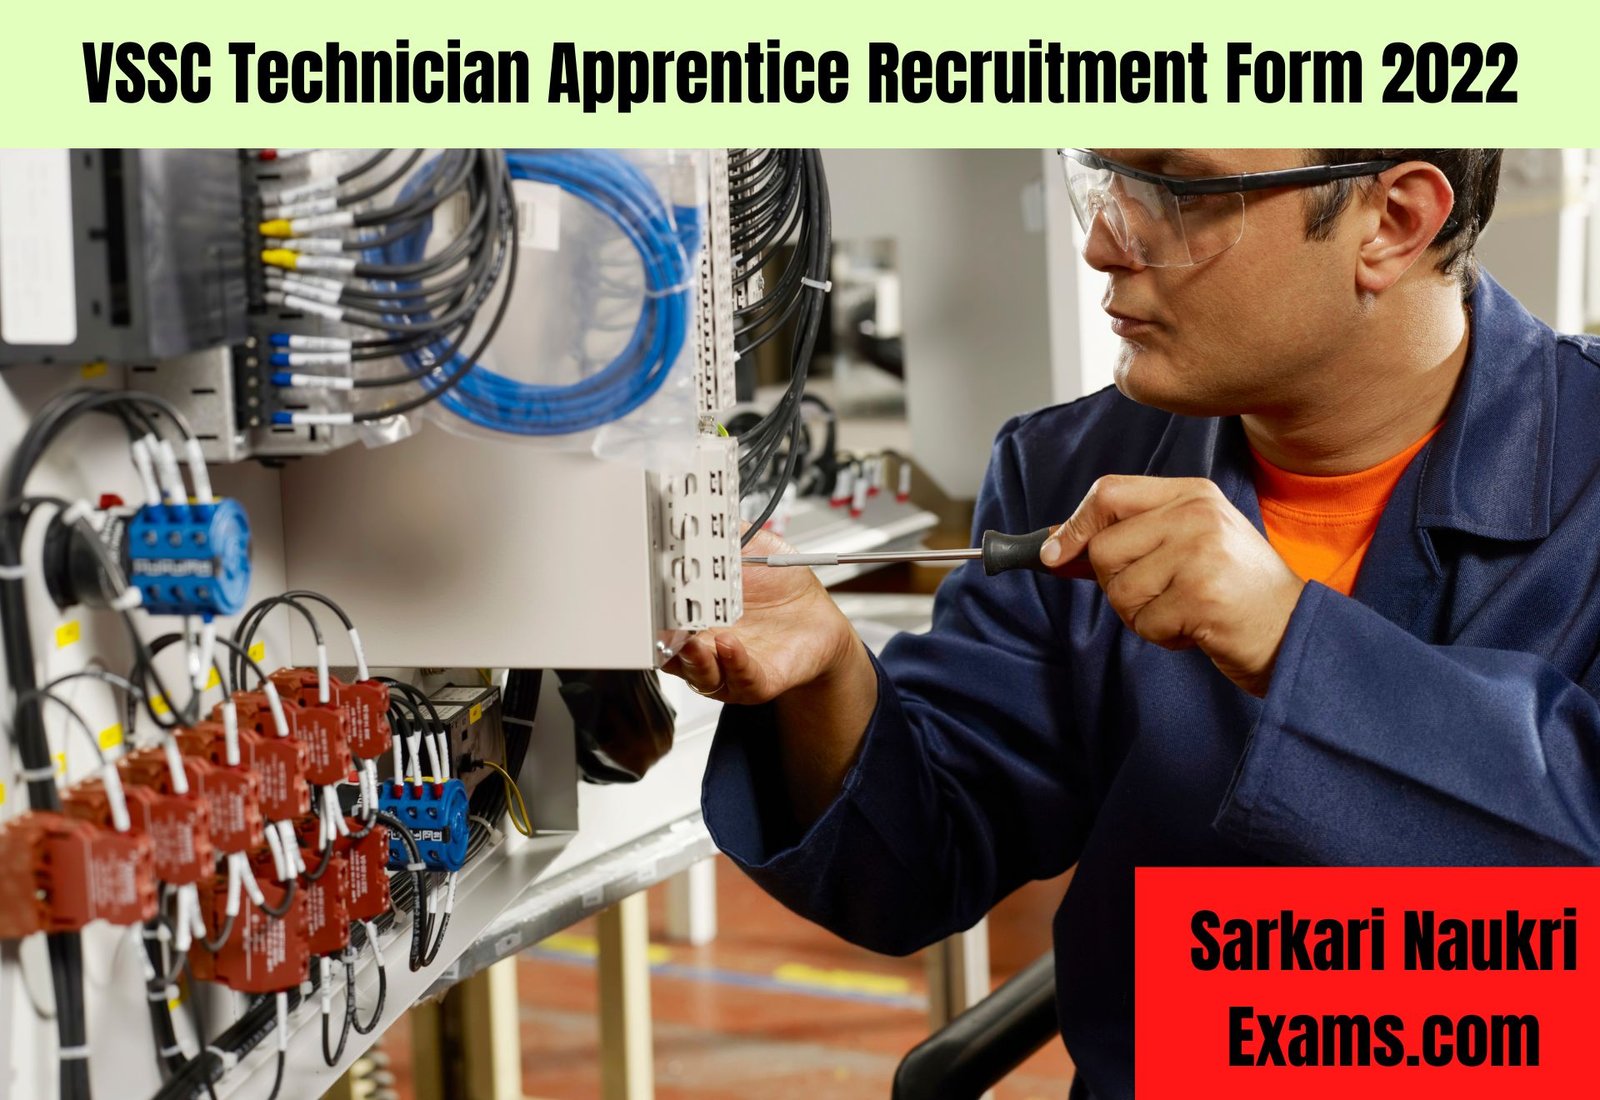 VSSC Technician Apprentice Recruitment Form 2022 | Starting Salary will be 8000/-